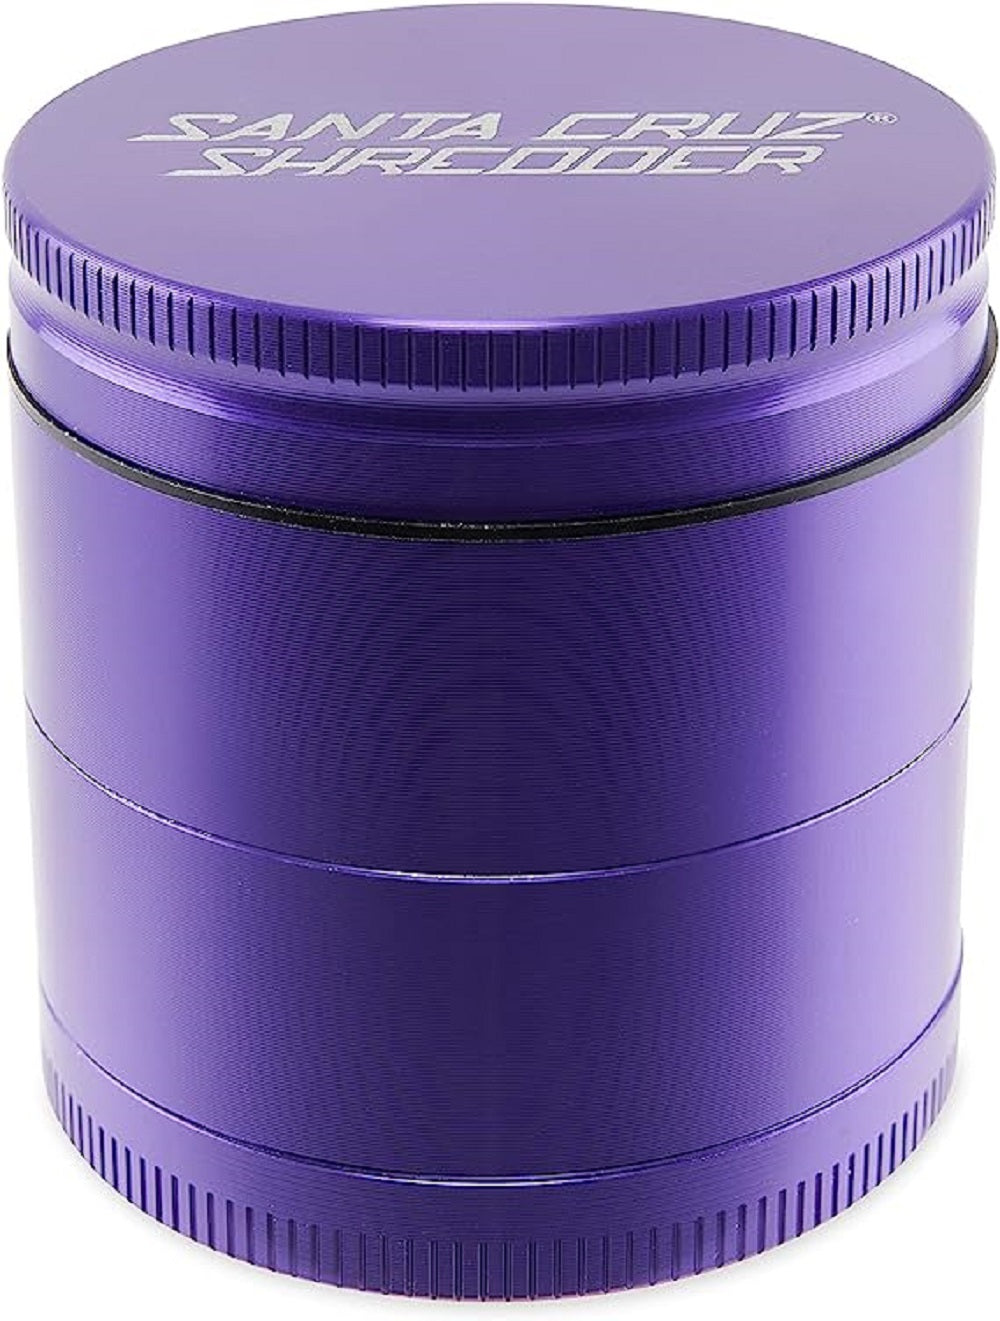 Santa Cruz Shredder 4 Piece Grinder - Medium  - Purple